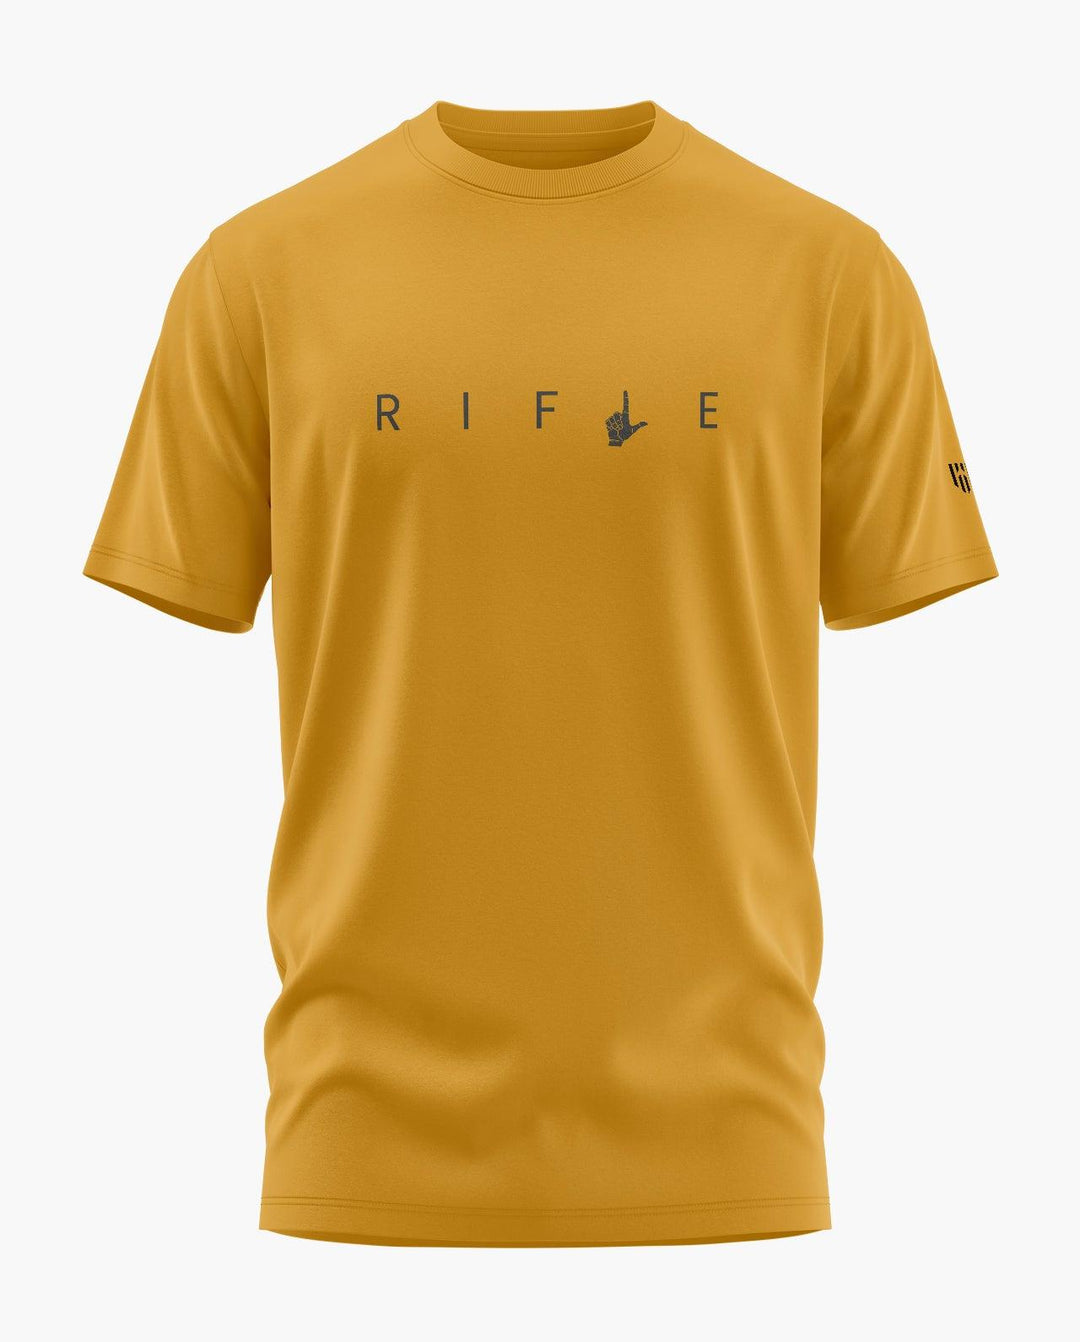 Rifle Sign T-Shirt - Aero Armour